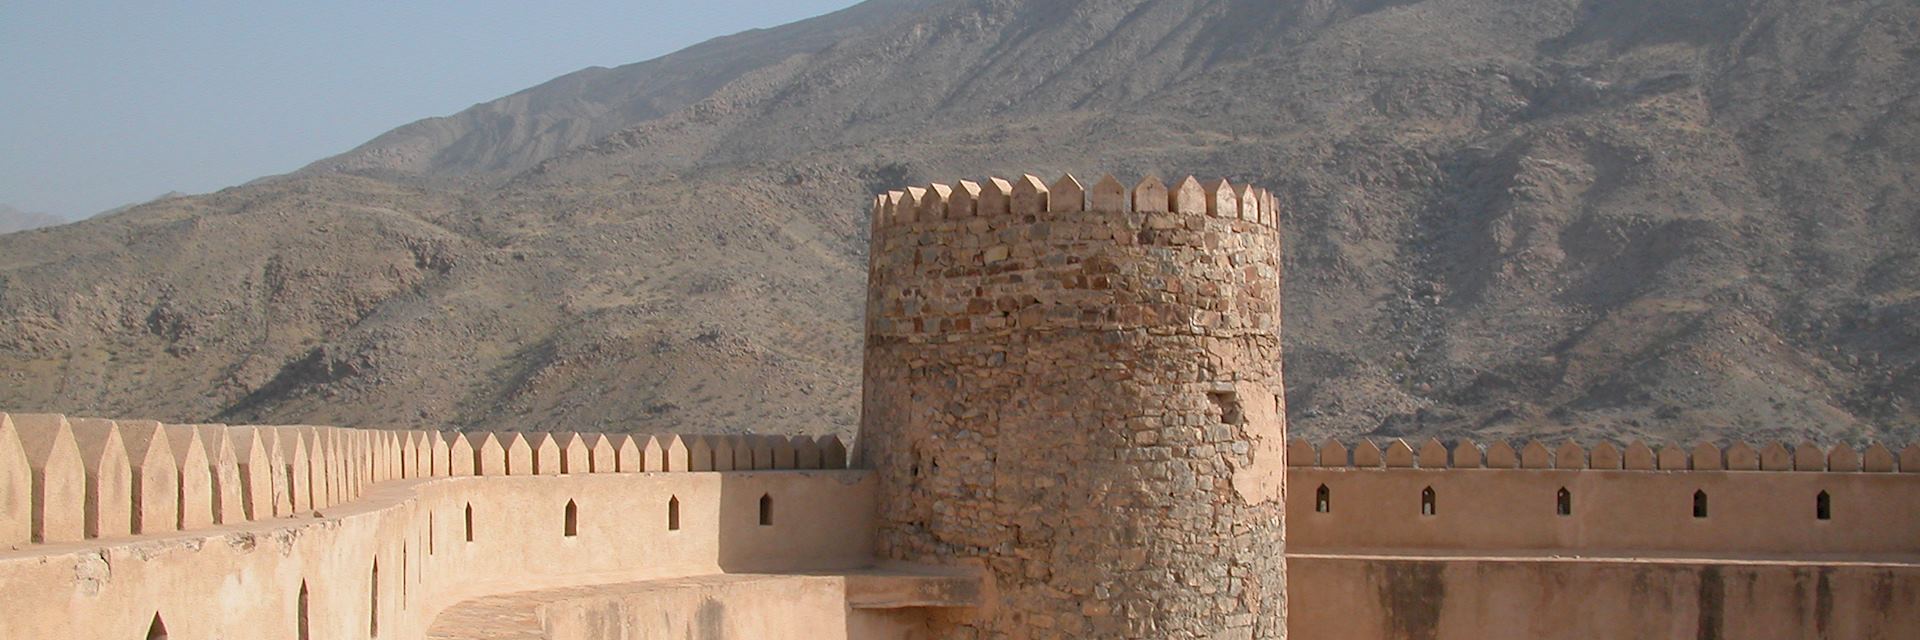 Al Rustaq Fort, Batinah Plain